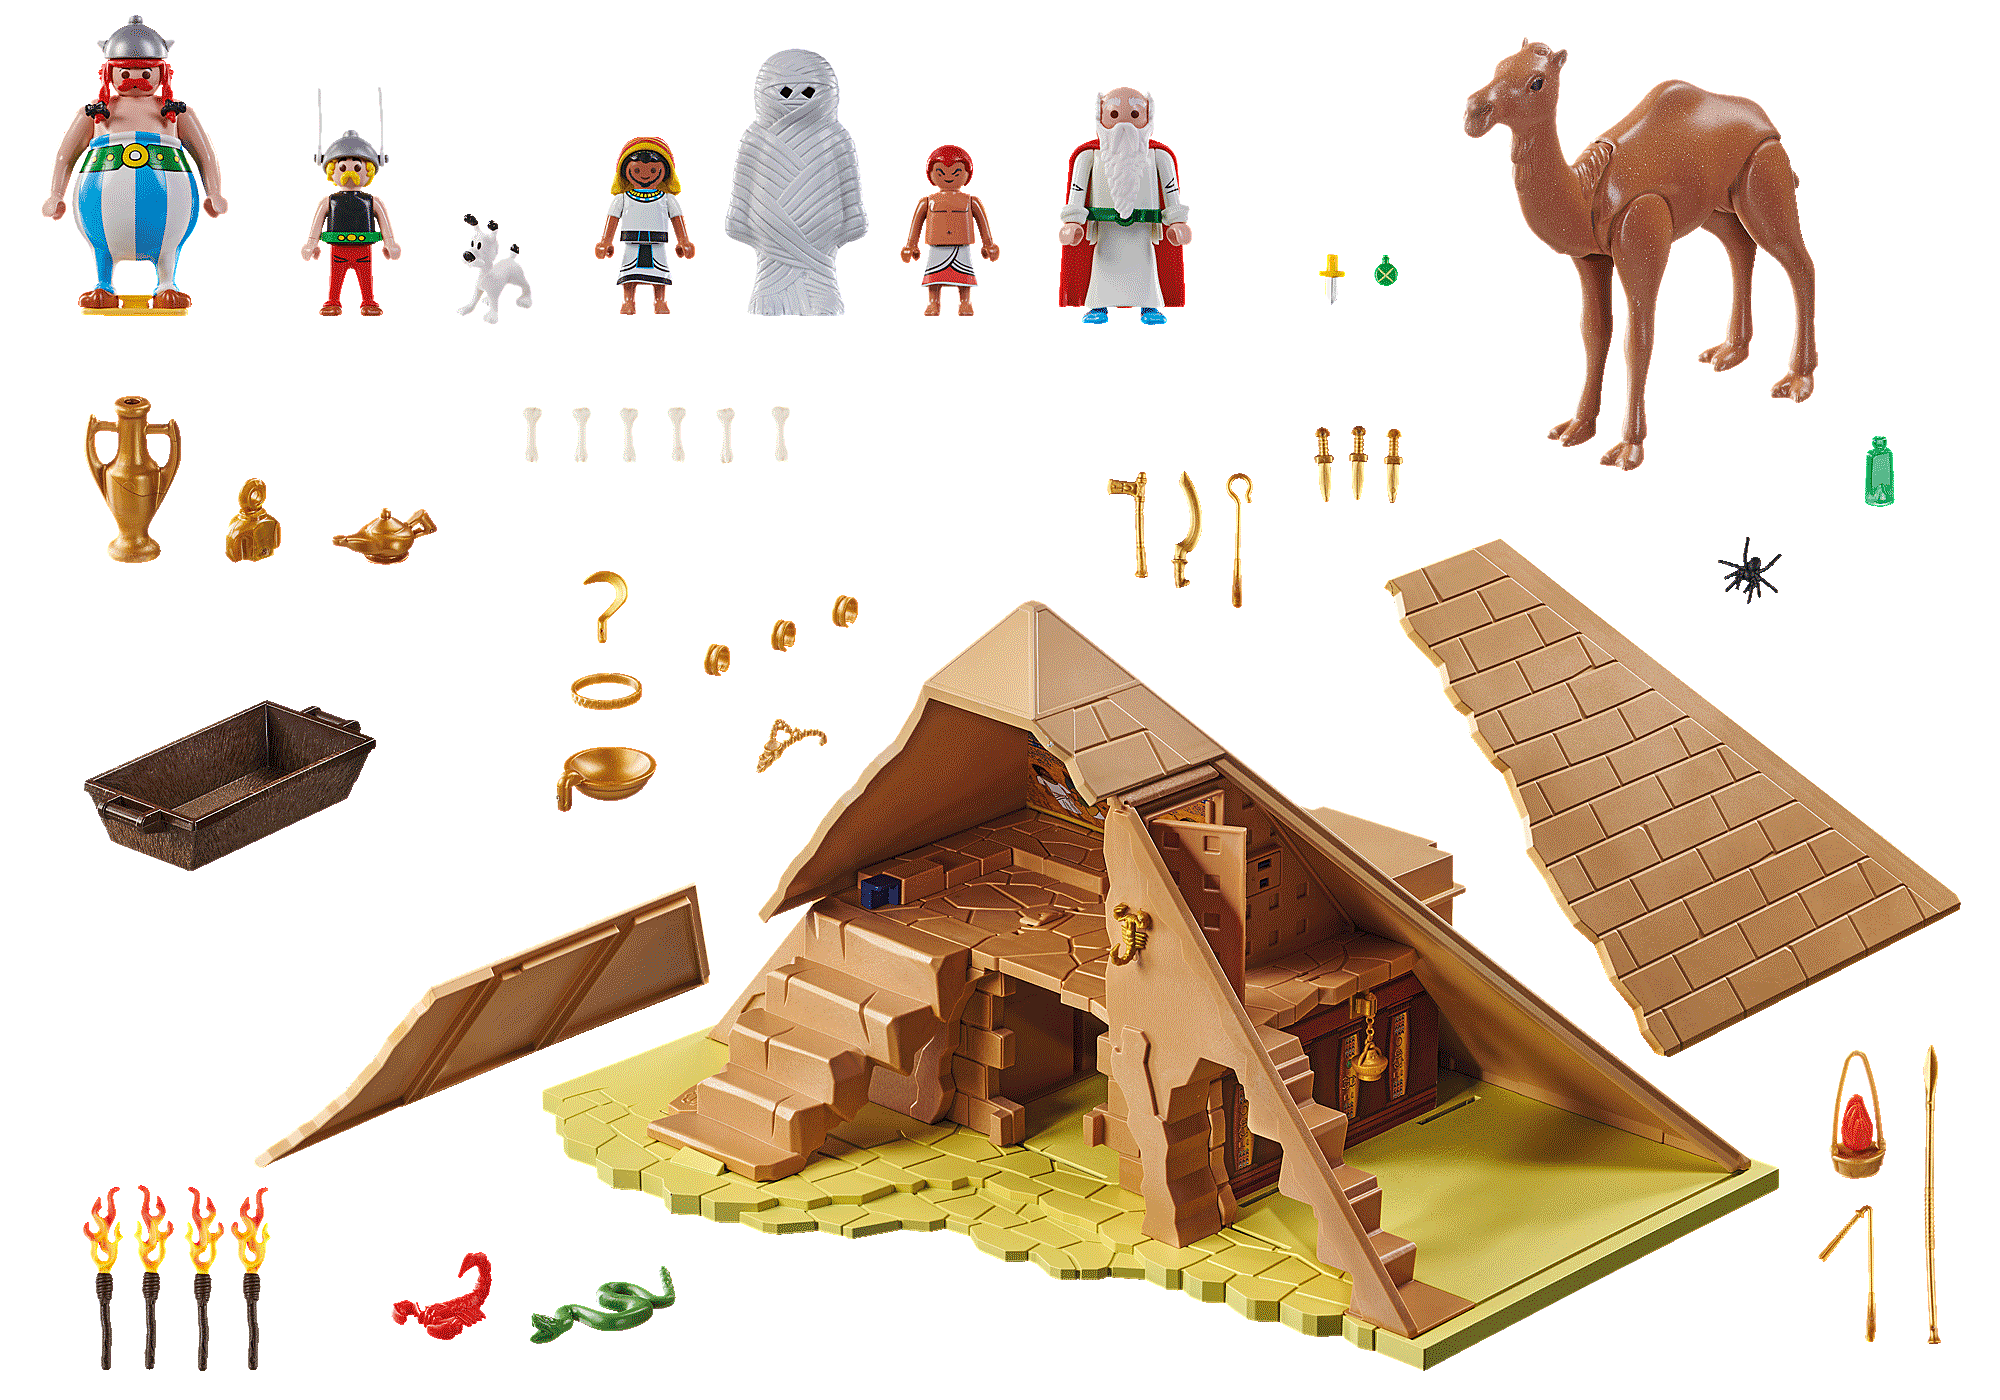 Playmobil 71148 Astérix : La Pyramide du Pharaon, Obélix, Astérix